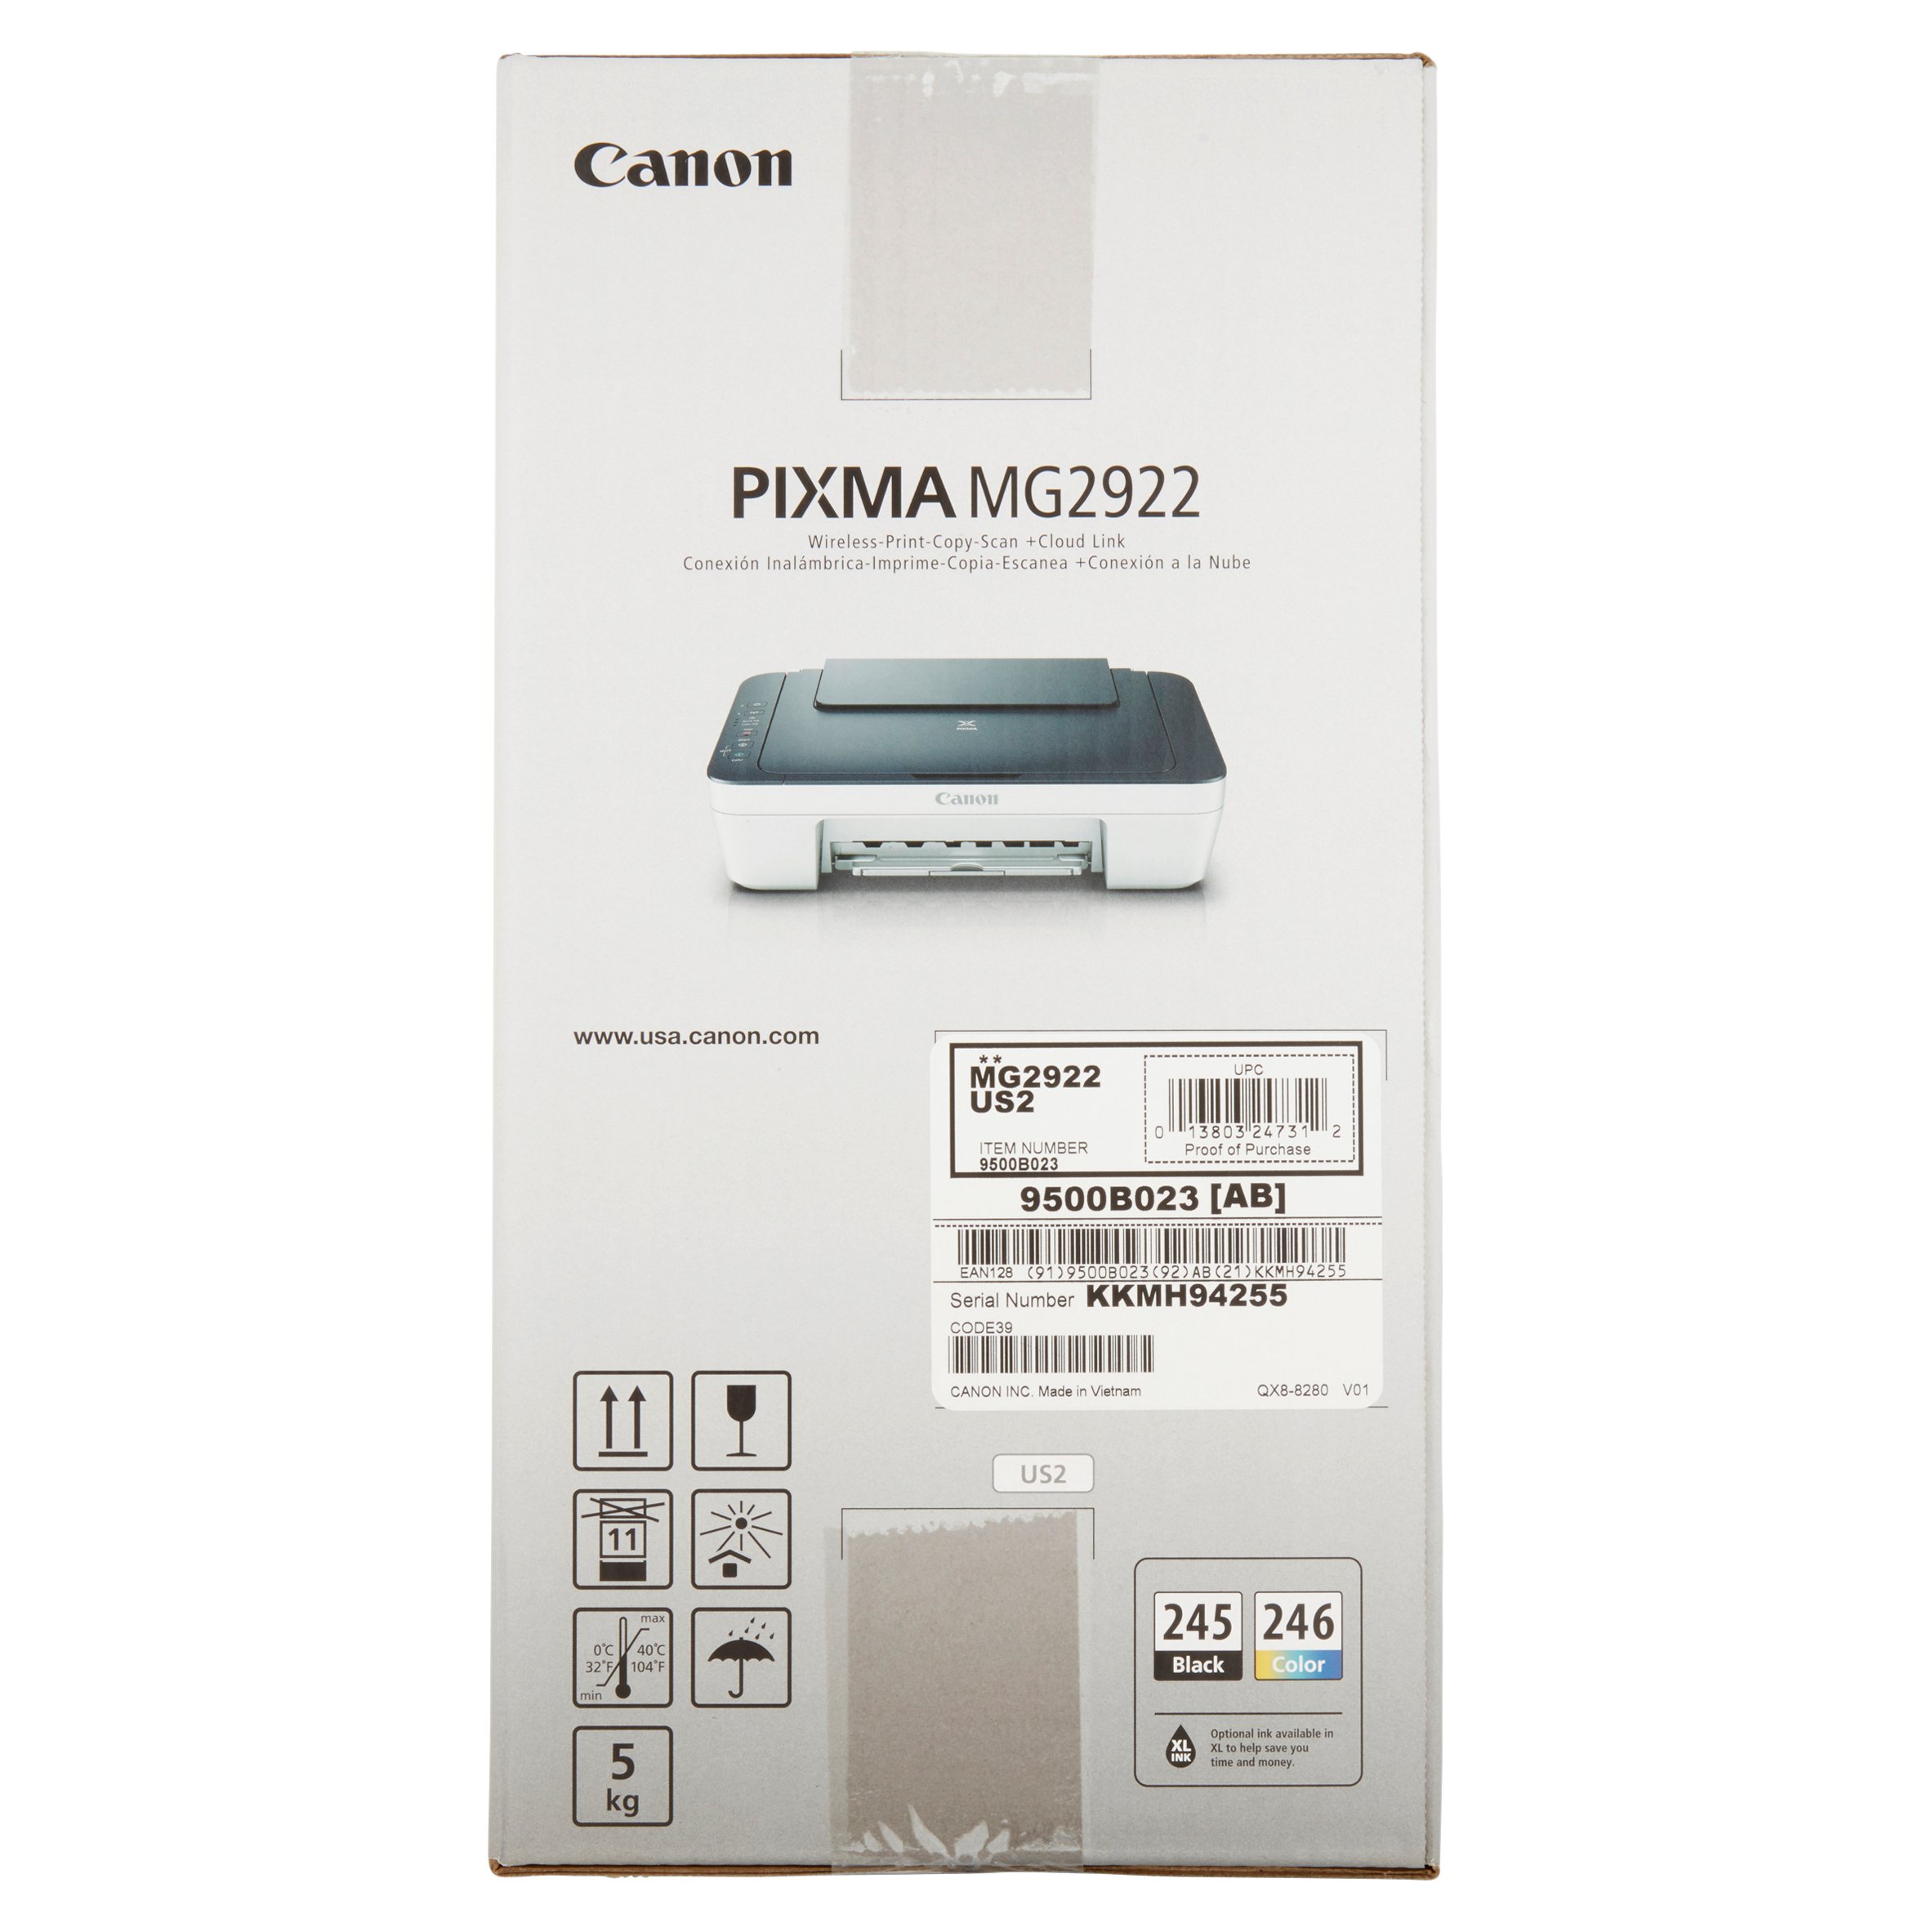 Canon PIXMA MG2922 - multifunction printer (color) - image 4 of 10